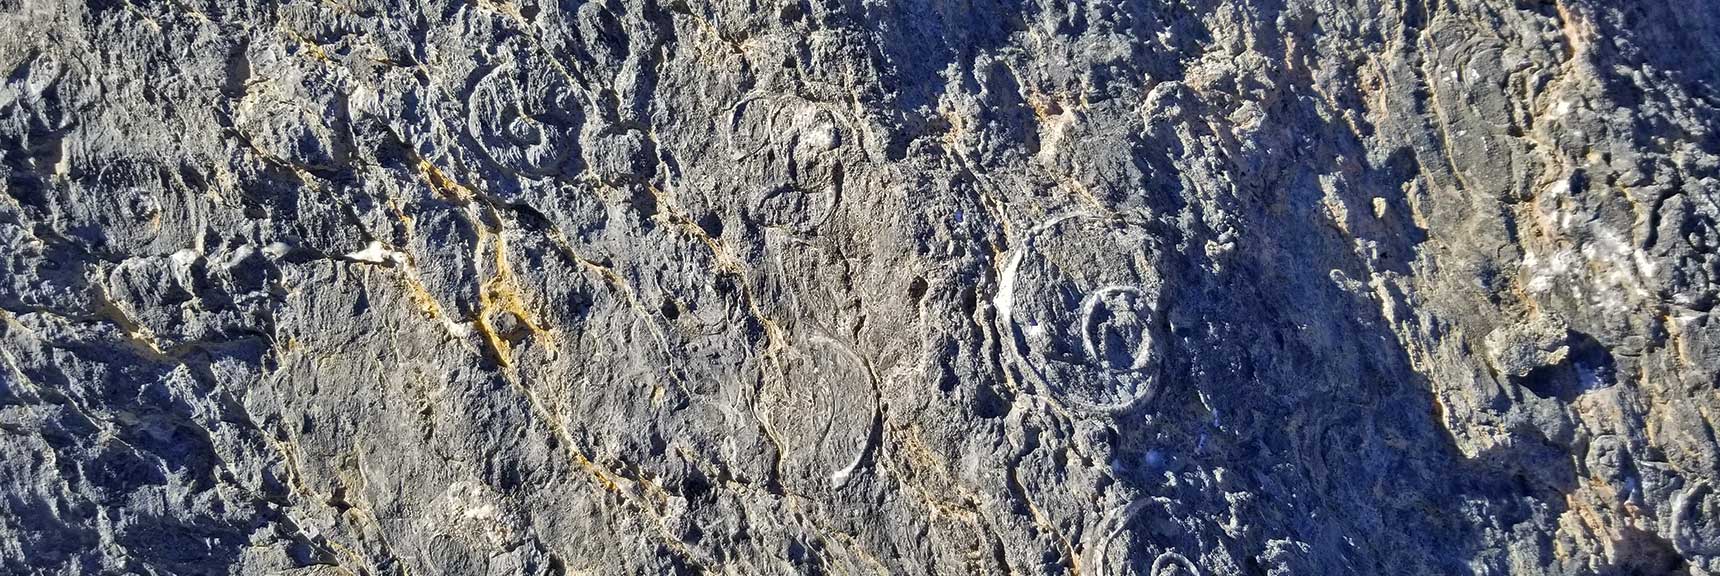 Fossil Rock on North Fossil Ridge in the Desert National Wildlife Refuge, Nevada